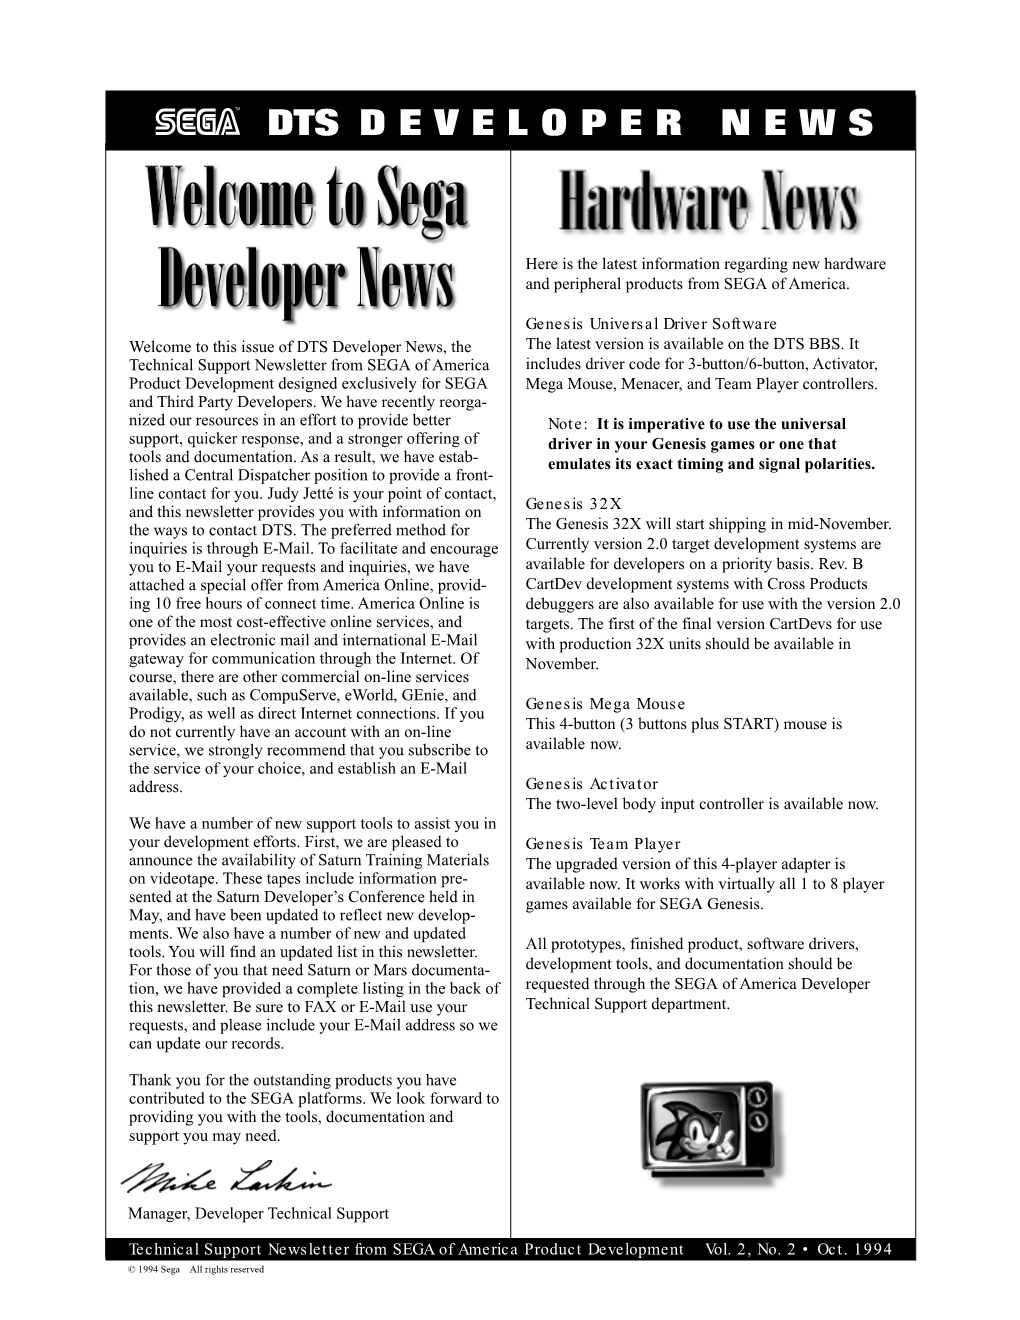 DTS Newsletter: October 1994